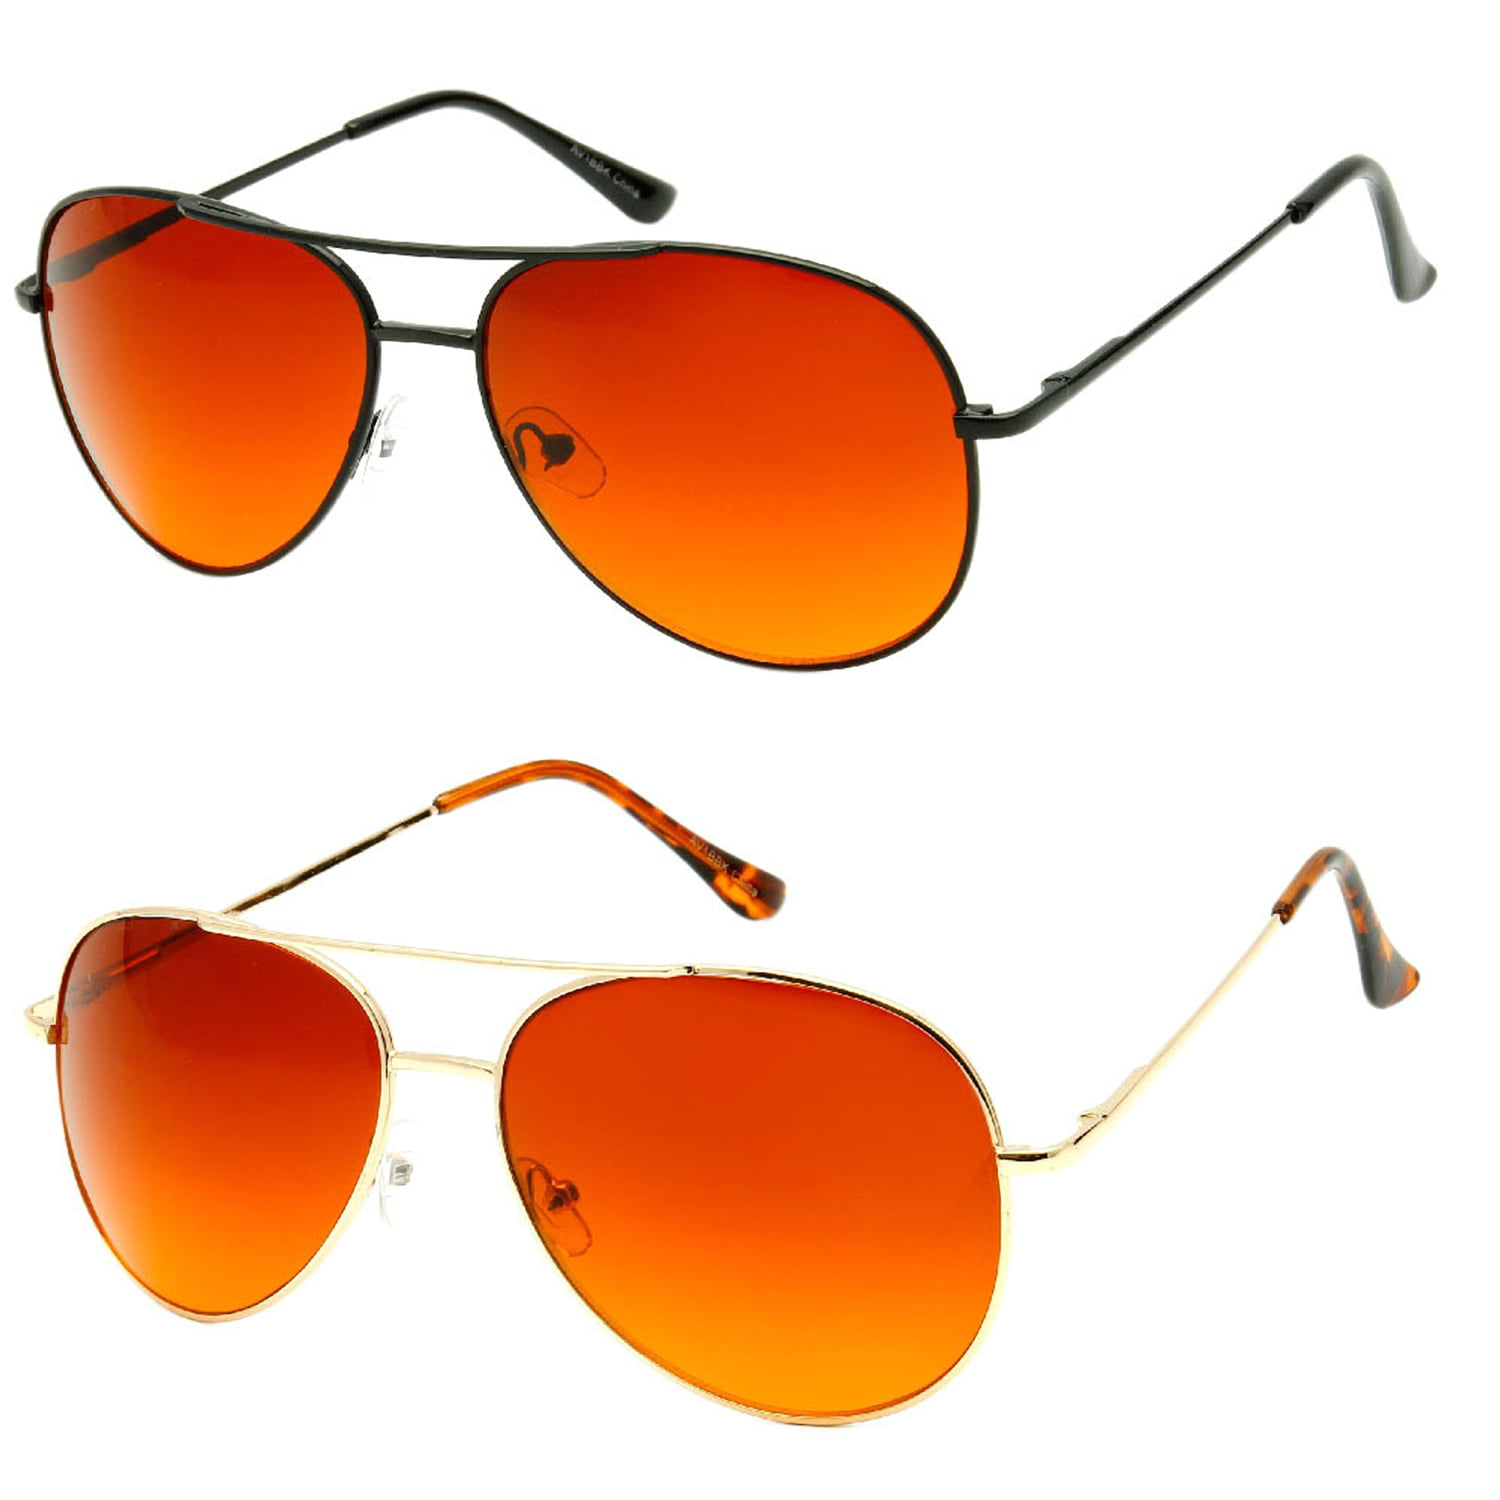 3 PAIR Aviator BLUE BLOCKER Sunglasses with Amber Lens 